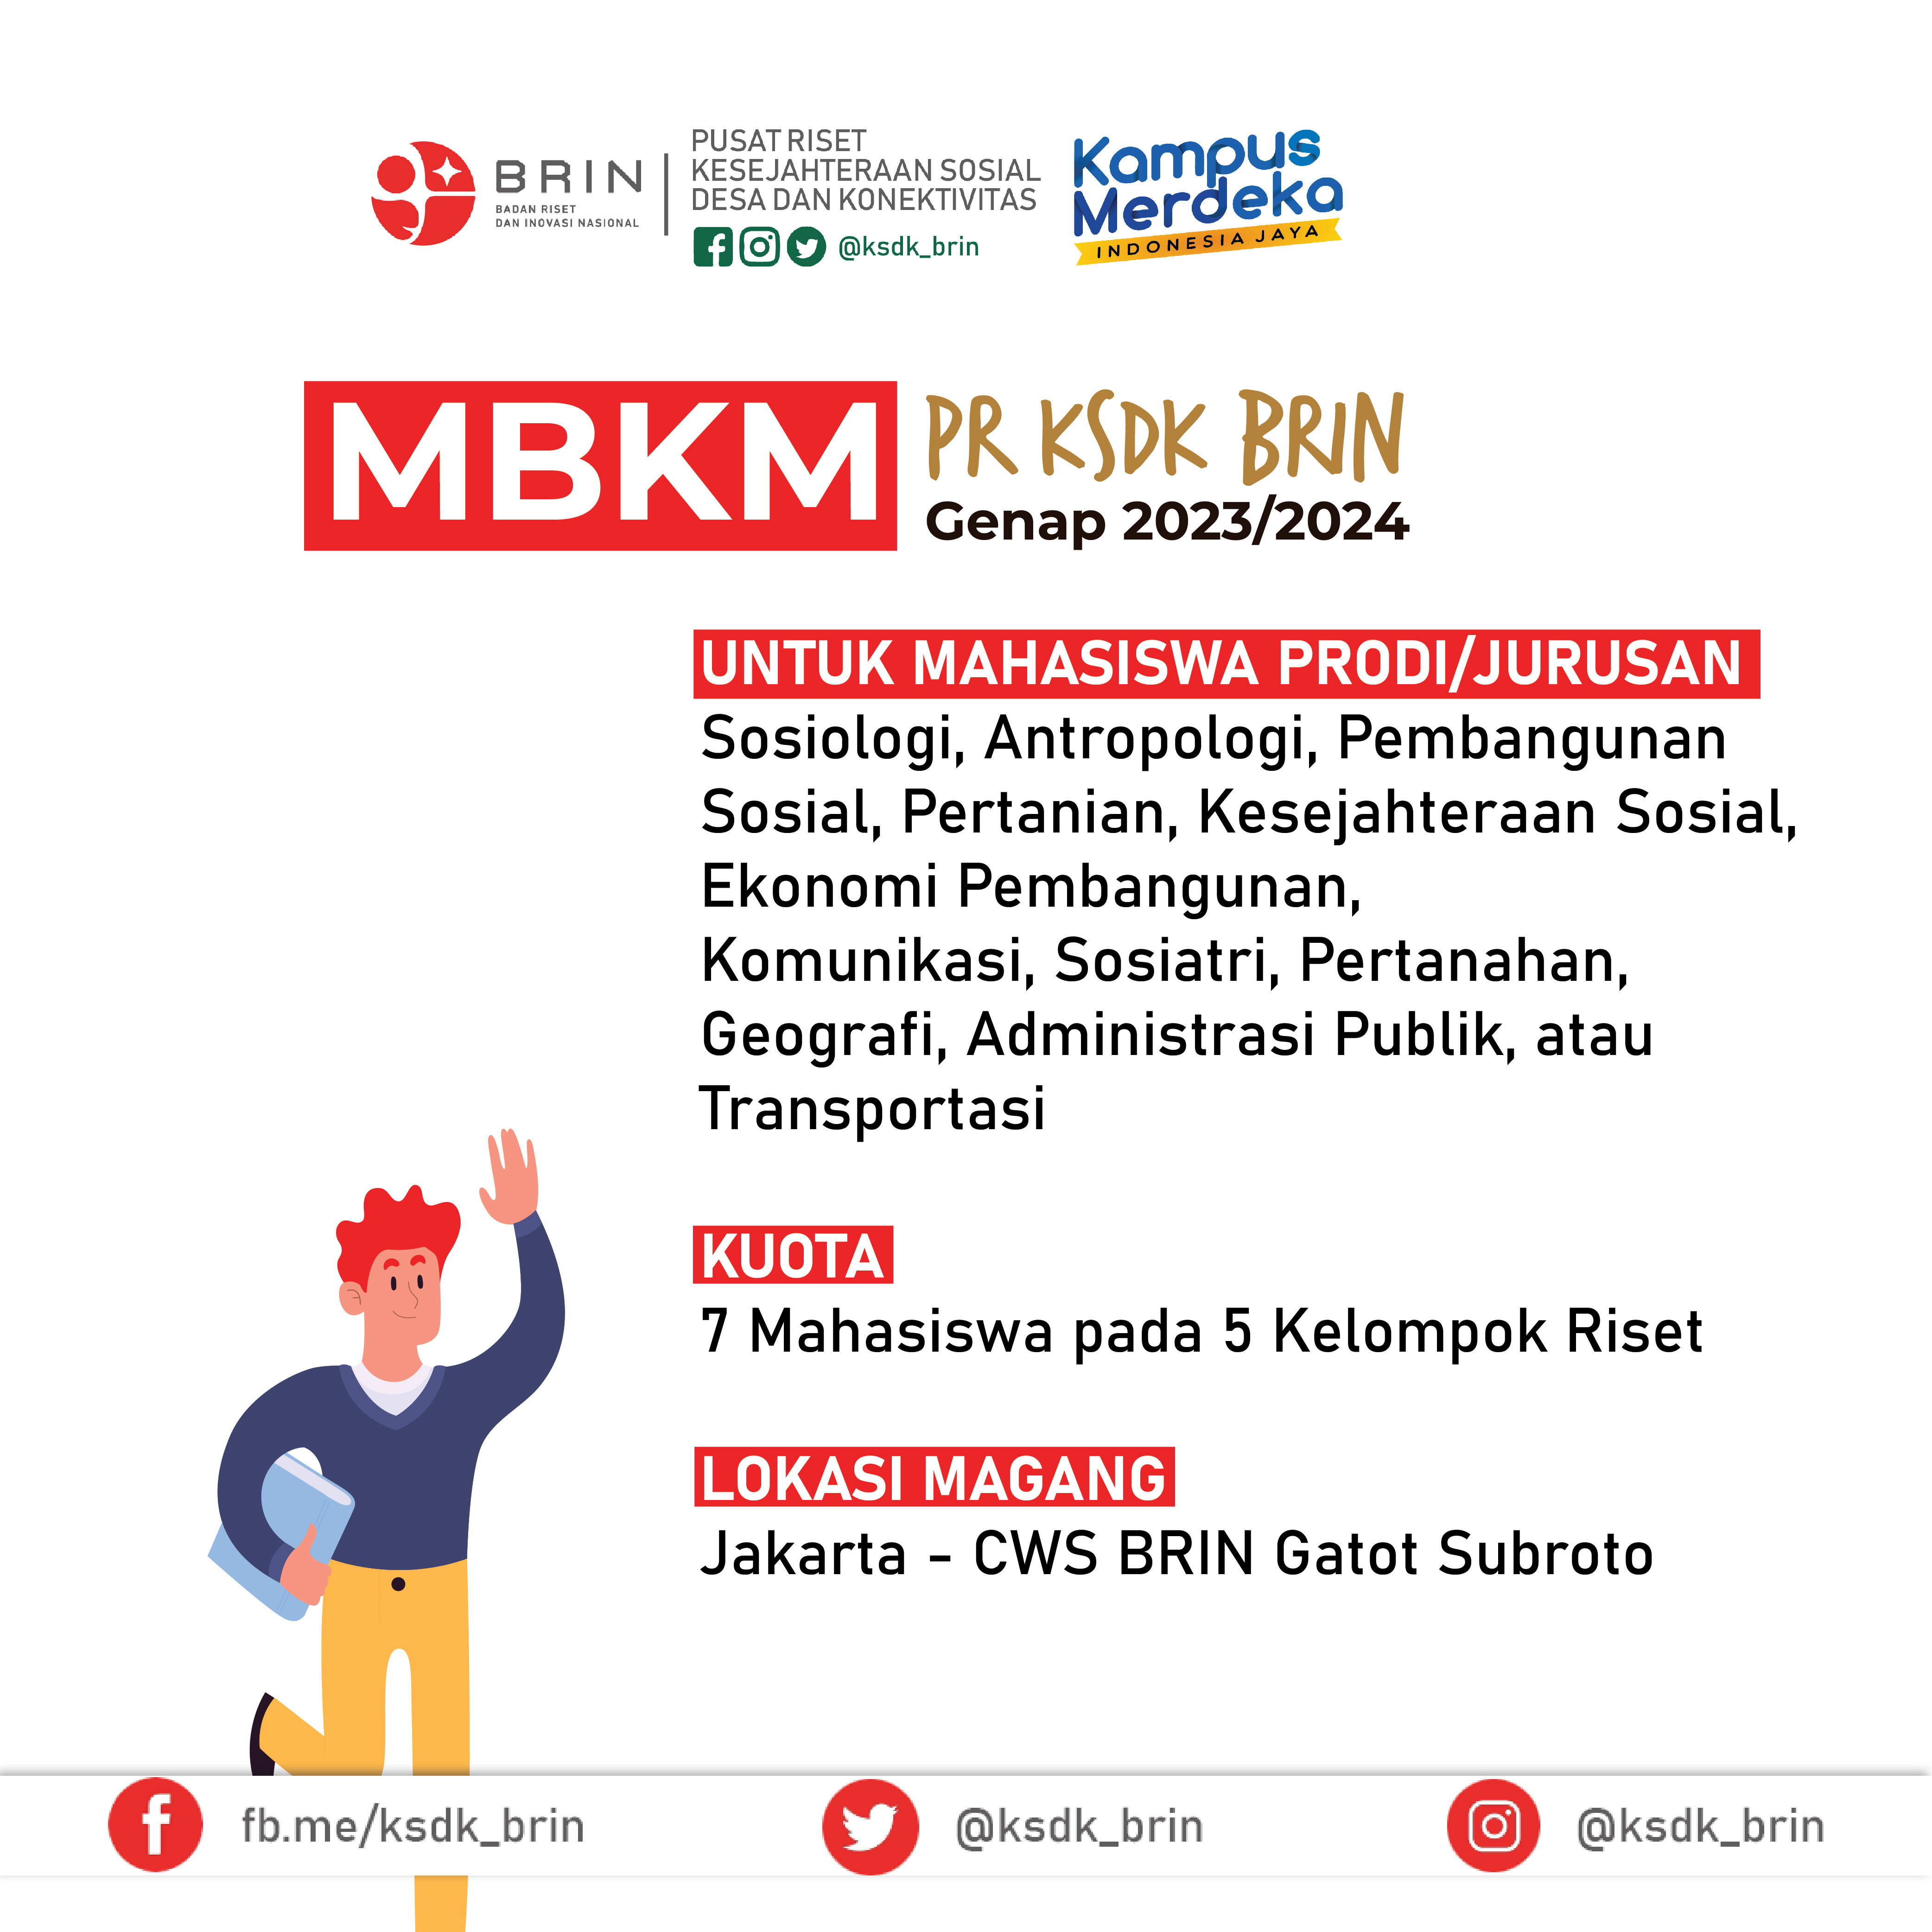 PR KSDK BRIN| Perlindungan dan Jaminan Sosial | Magang/Praktek Kerja (Non Riset) - Jakarta (Gatot Subroto) 